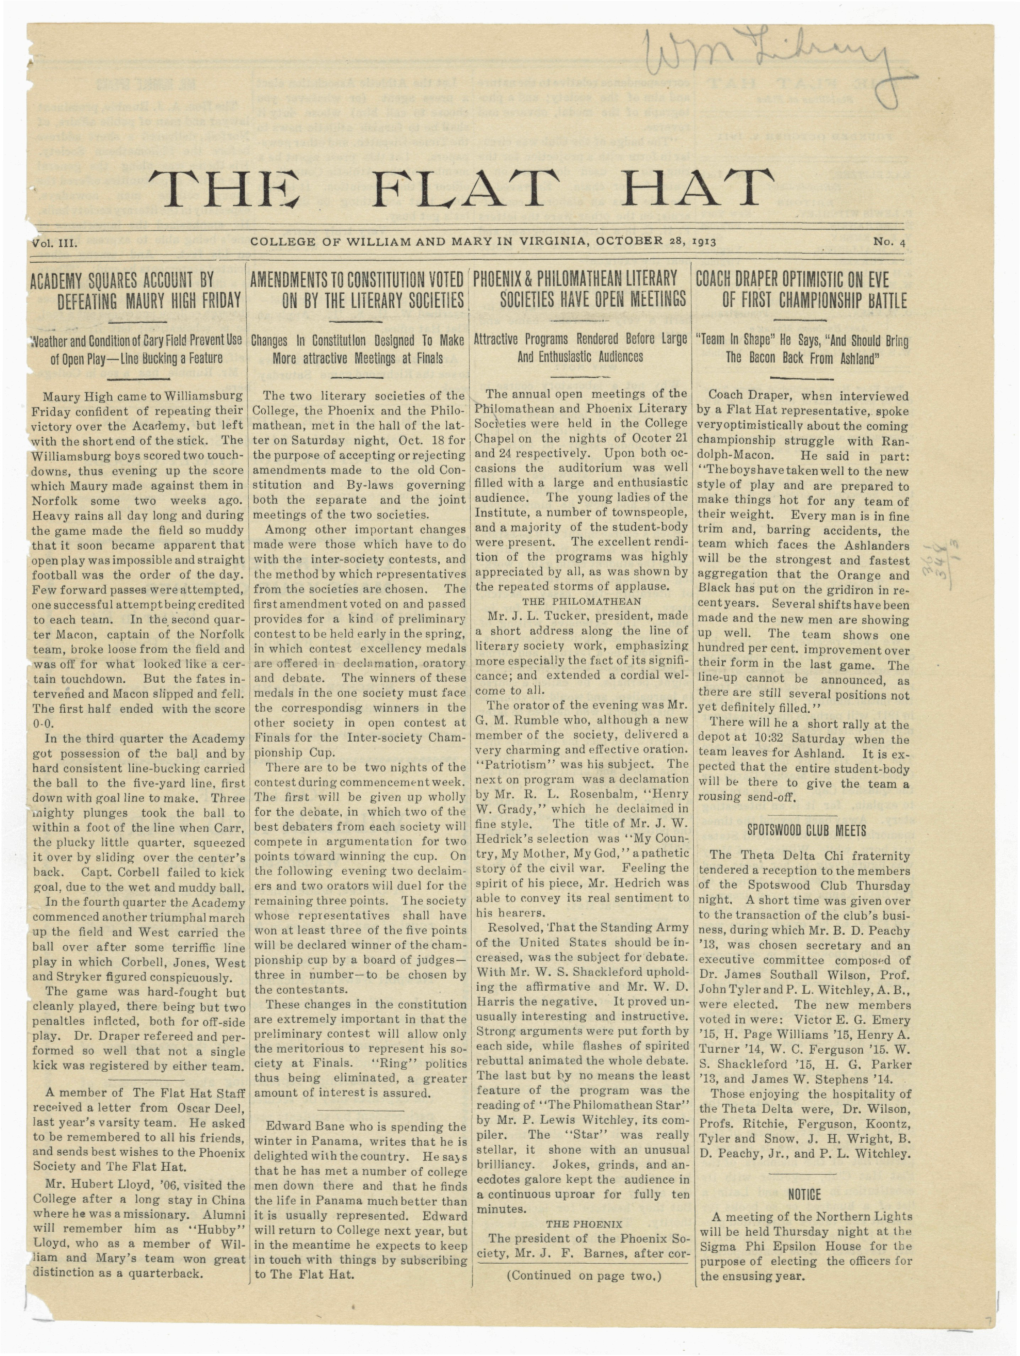 The Flat Hat